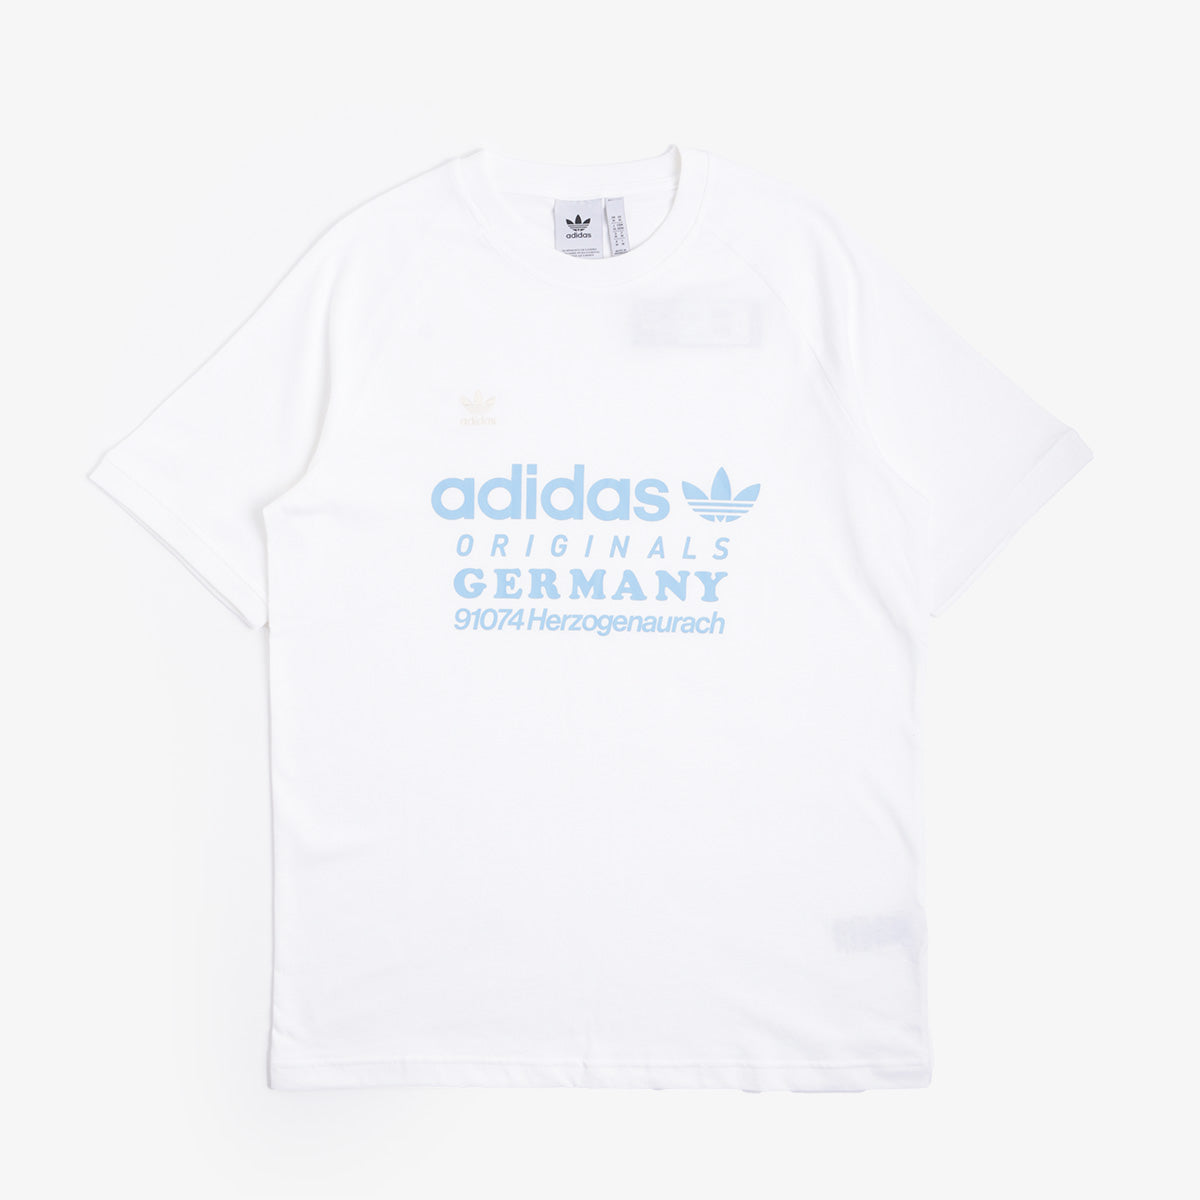 Adidas Originals GRF T-Shirt, White, Detail Shot 5